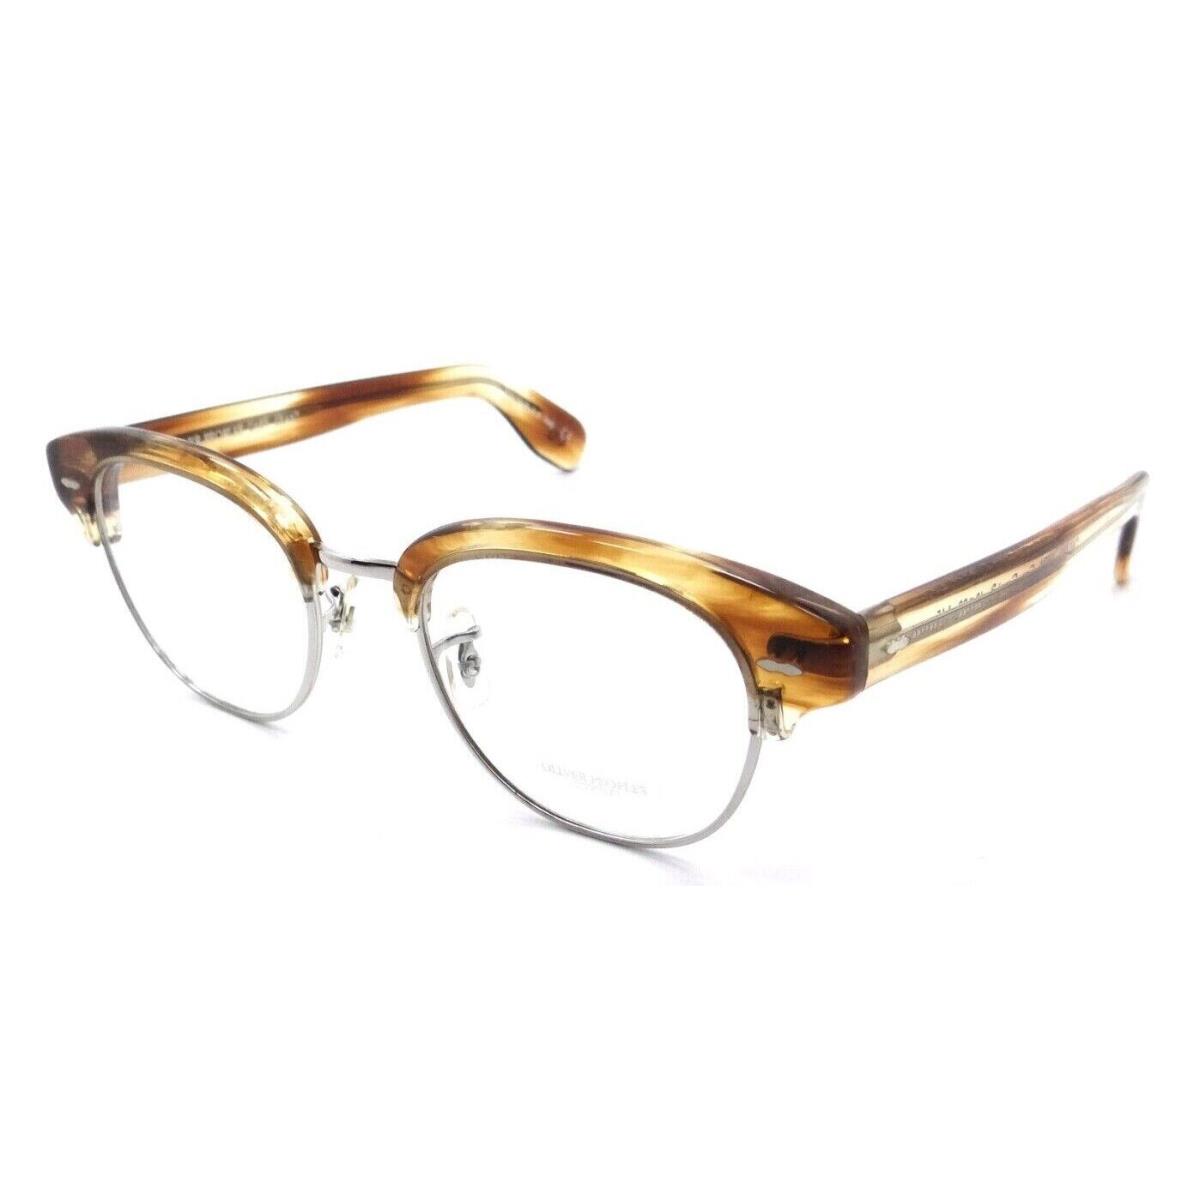 Oliver Peoples Eyeglasses Frames OV 5436 1674 48-20-145 Cary Grant 2 Honey Vsb